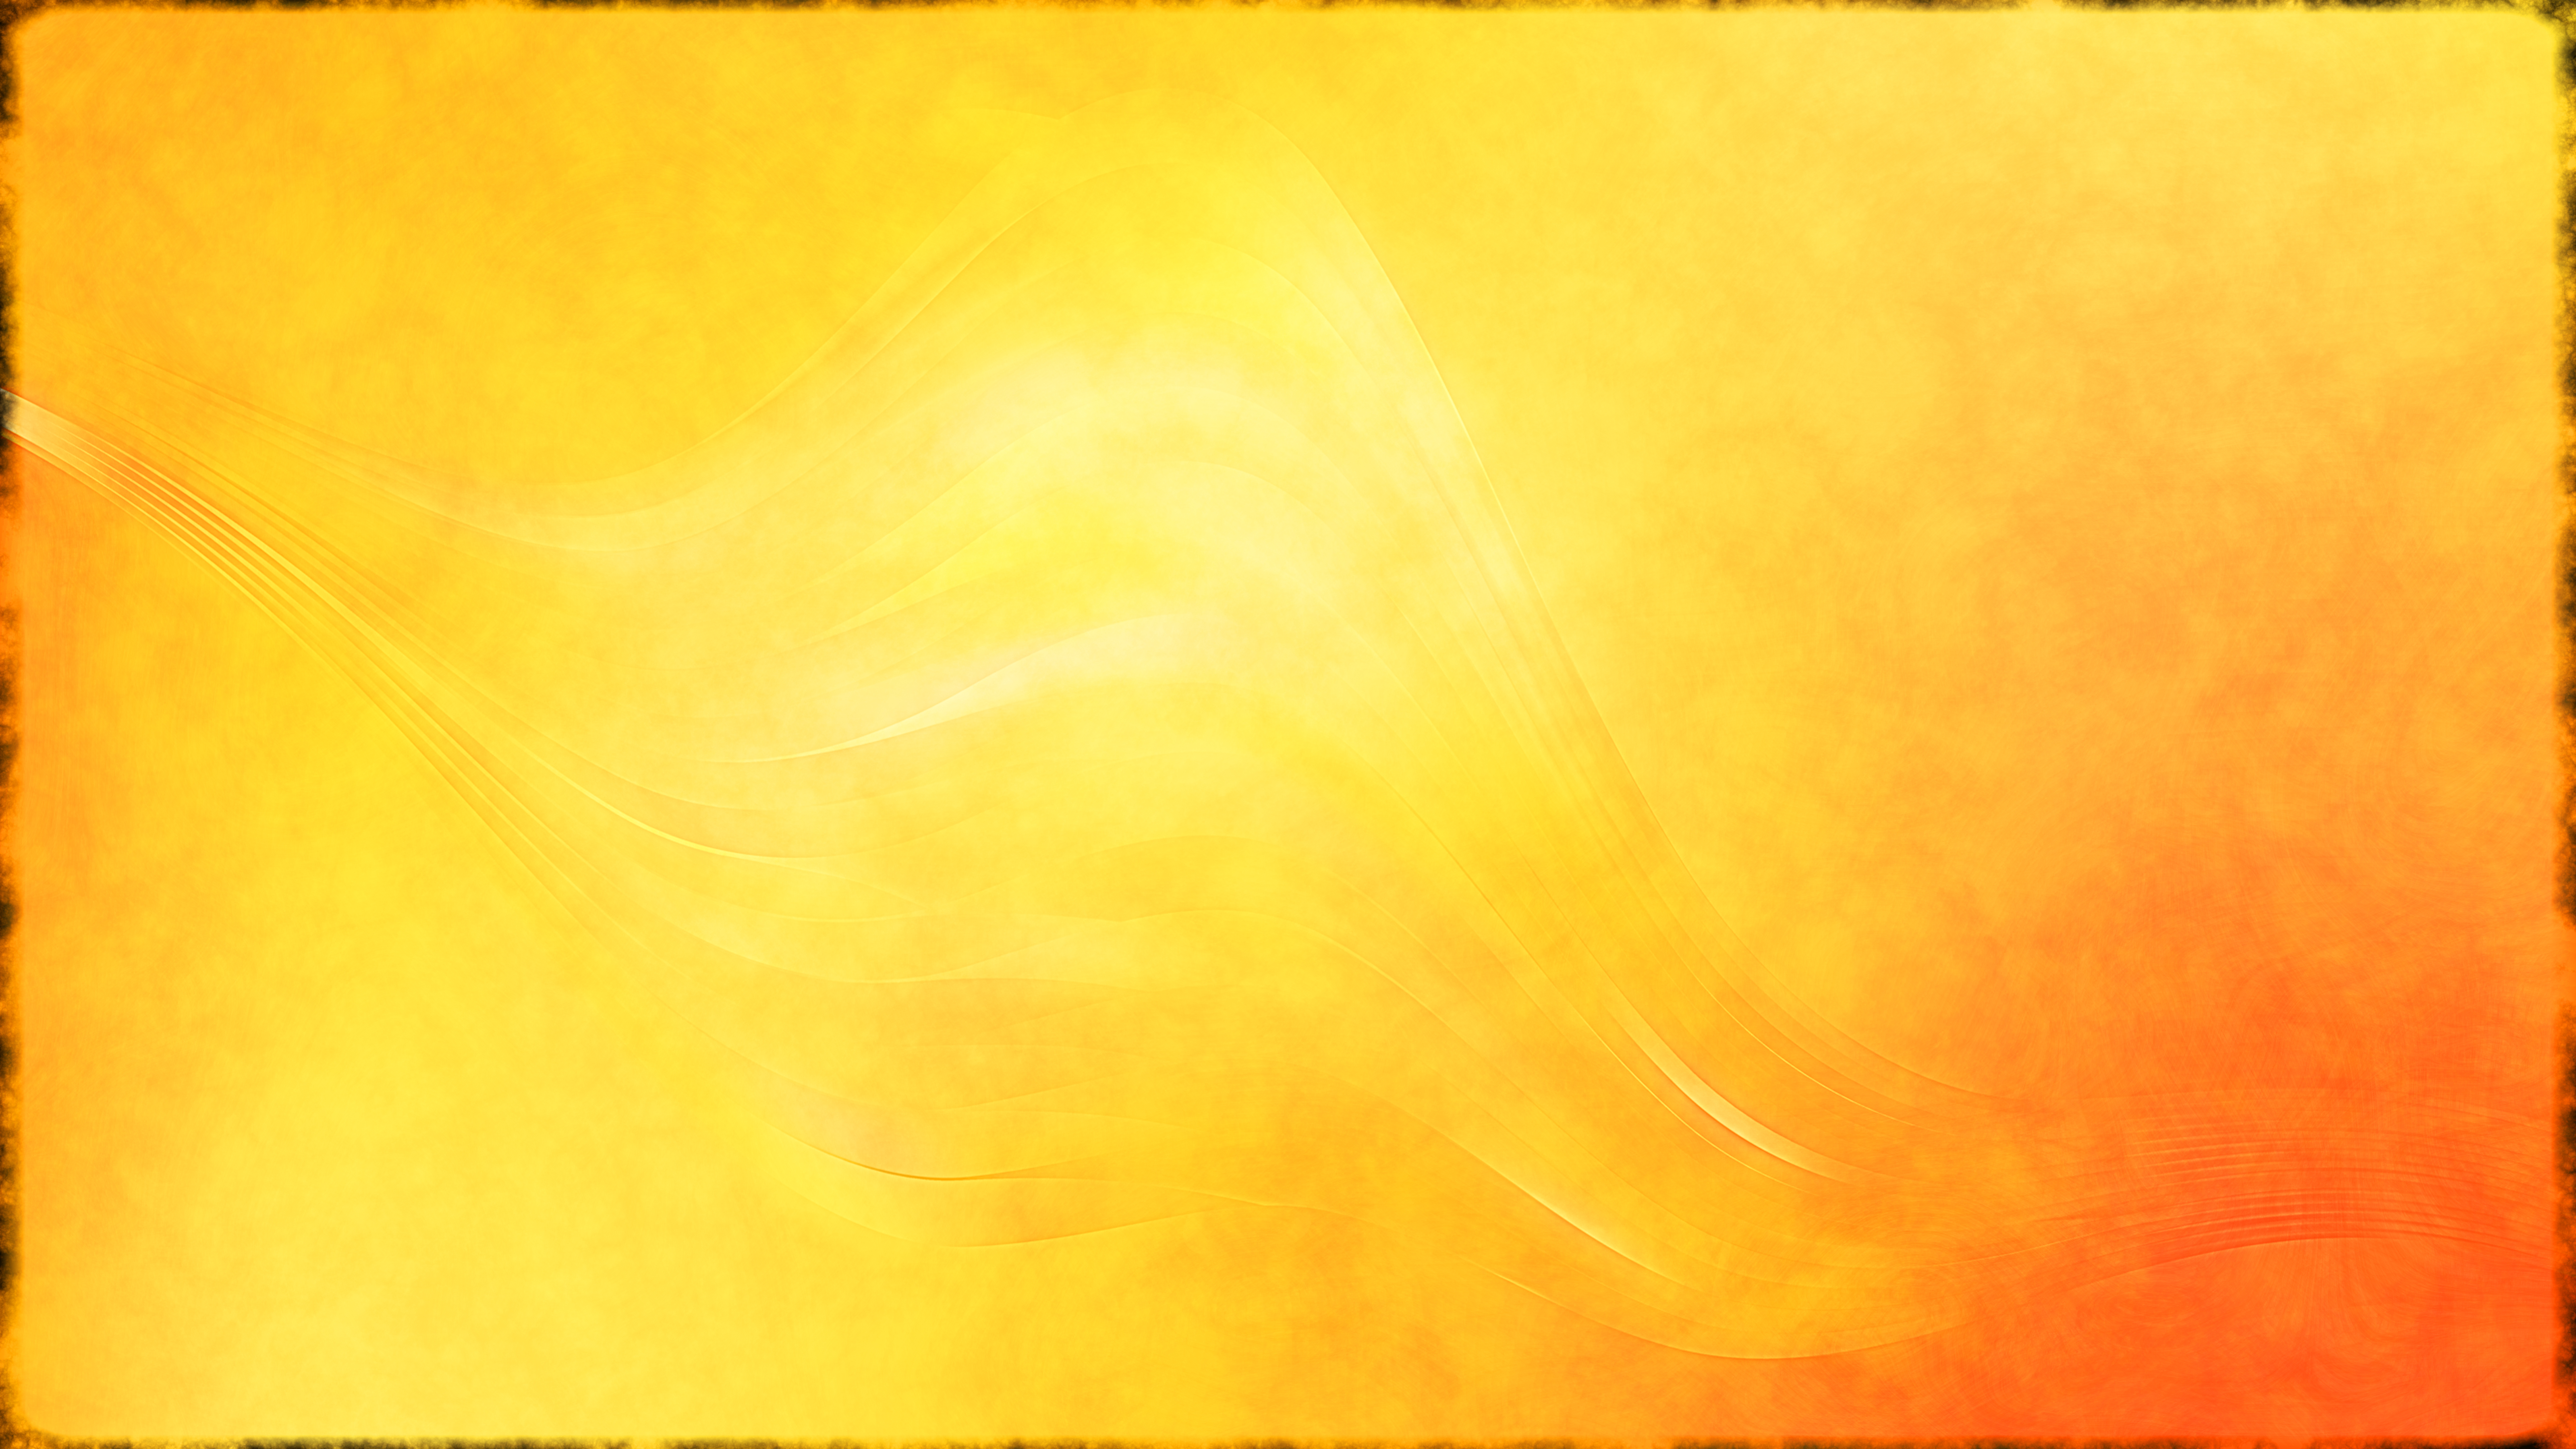 Yellow orange texture background - Bộ sưu tập background kết cấu cao cấp